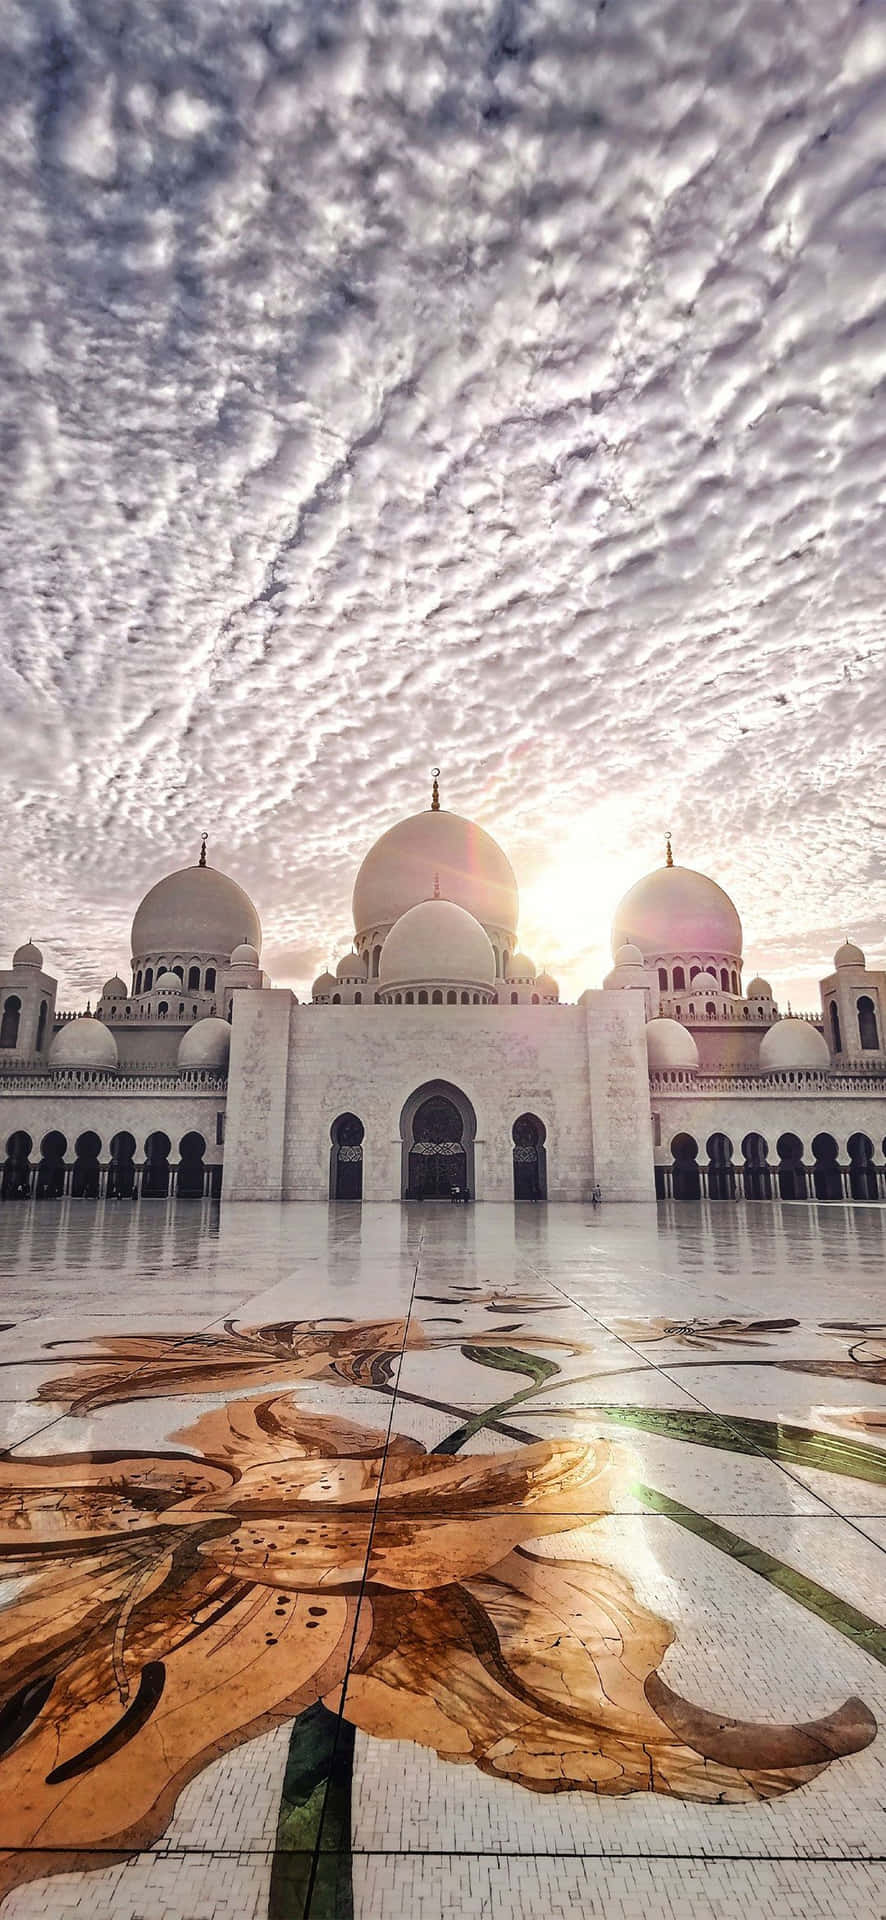 Grand_ Mosque_ Under_ Cloudy_ Sky Wallpaper